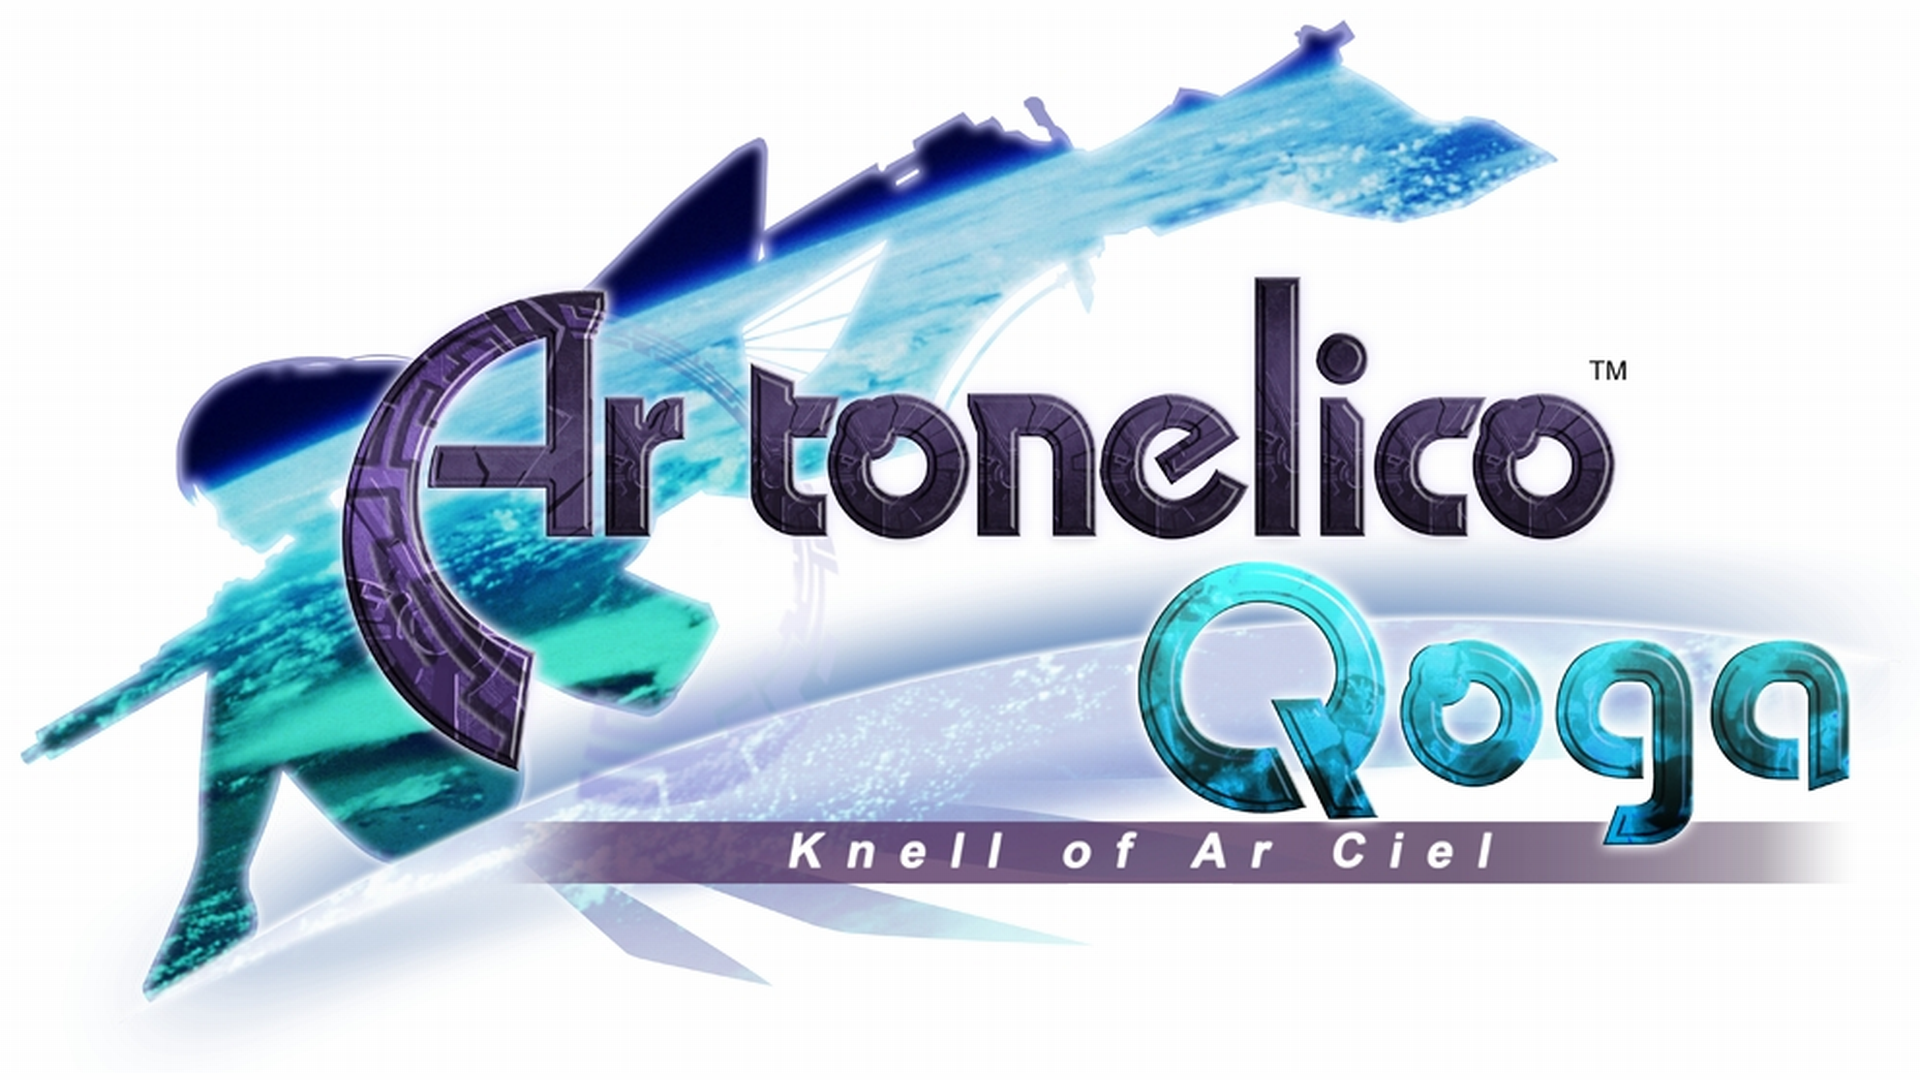 Ar tonelico Qoga: Knell of Ar Ciel Logo